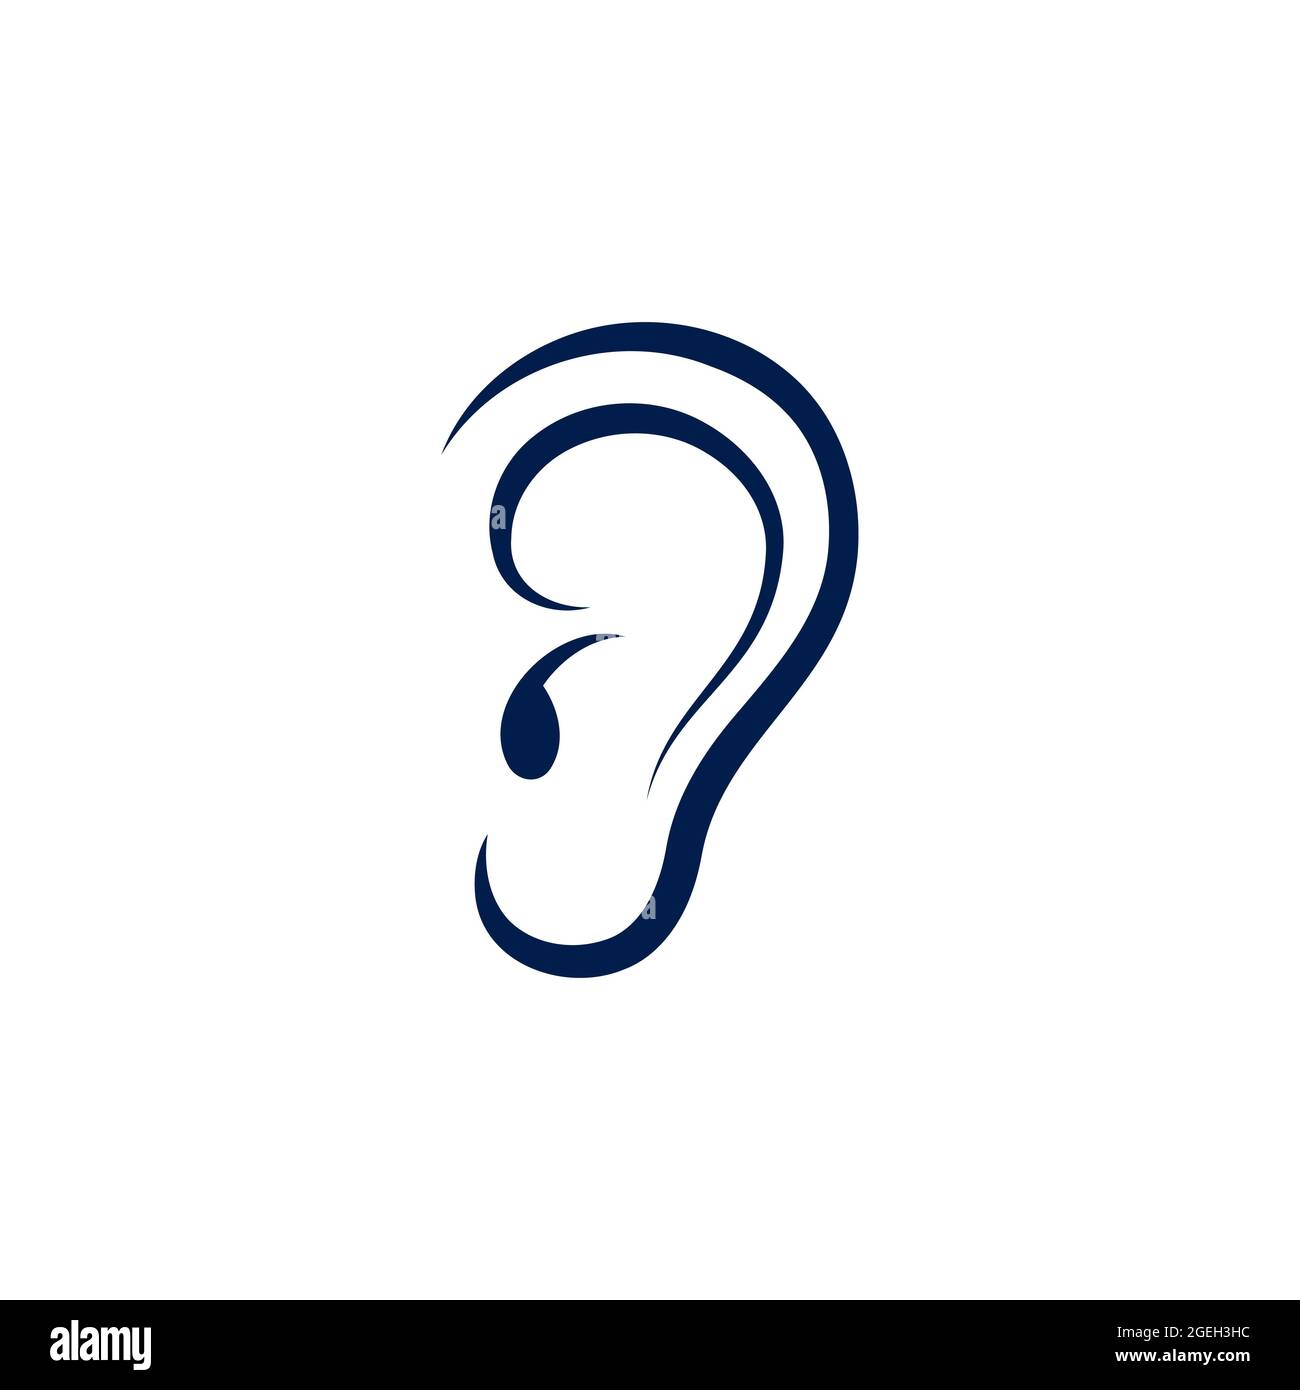 Hearing icon illustration Template vector icon design Stock Photo